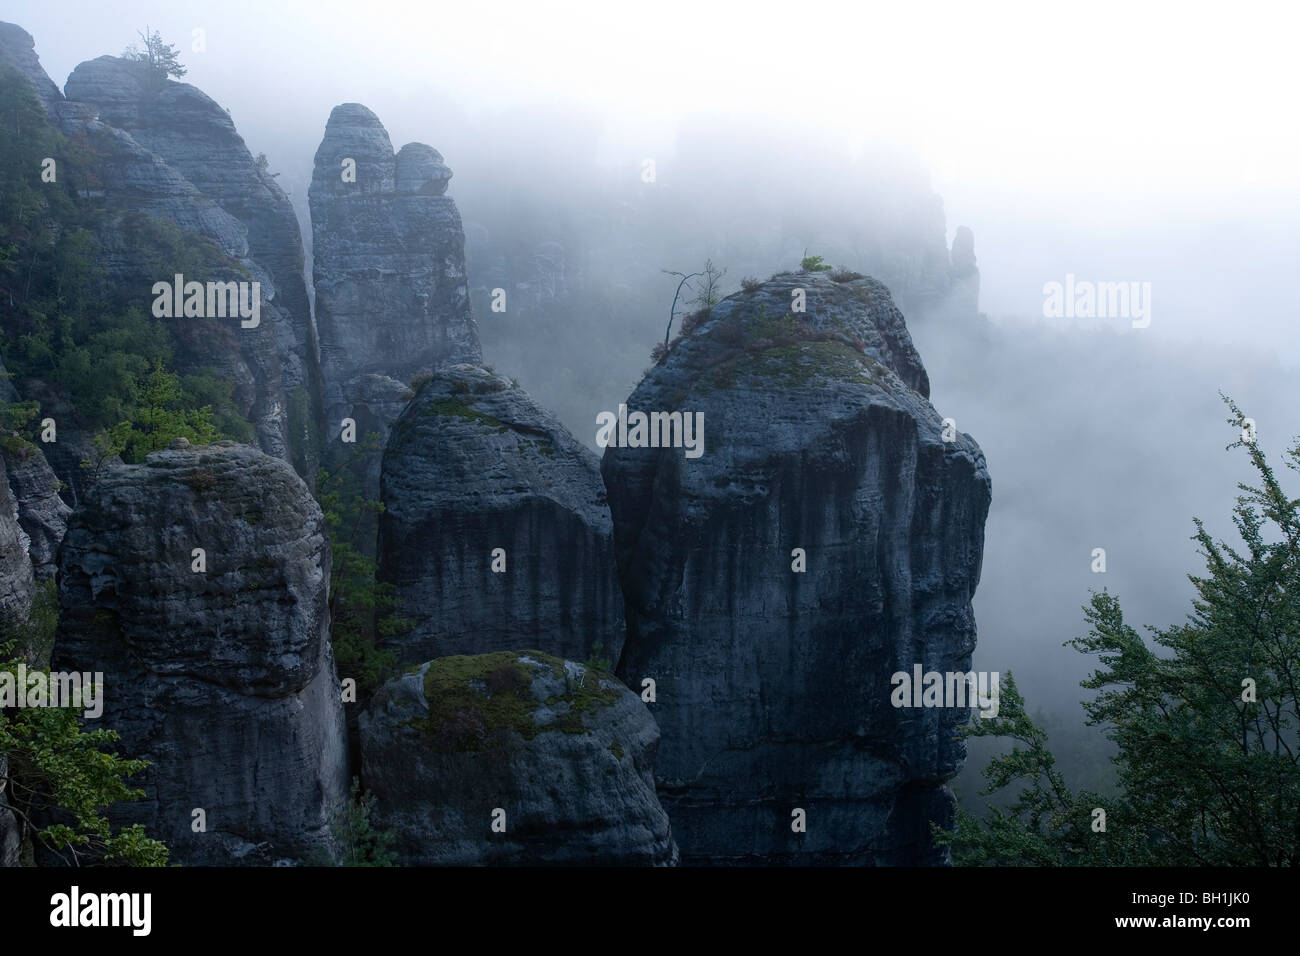 Rock formation in the fog, Neurathener rock faces, Saxon Switzerland, Elbsandsteingebirge, Saxony, Germany, Europe Stock Photo